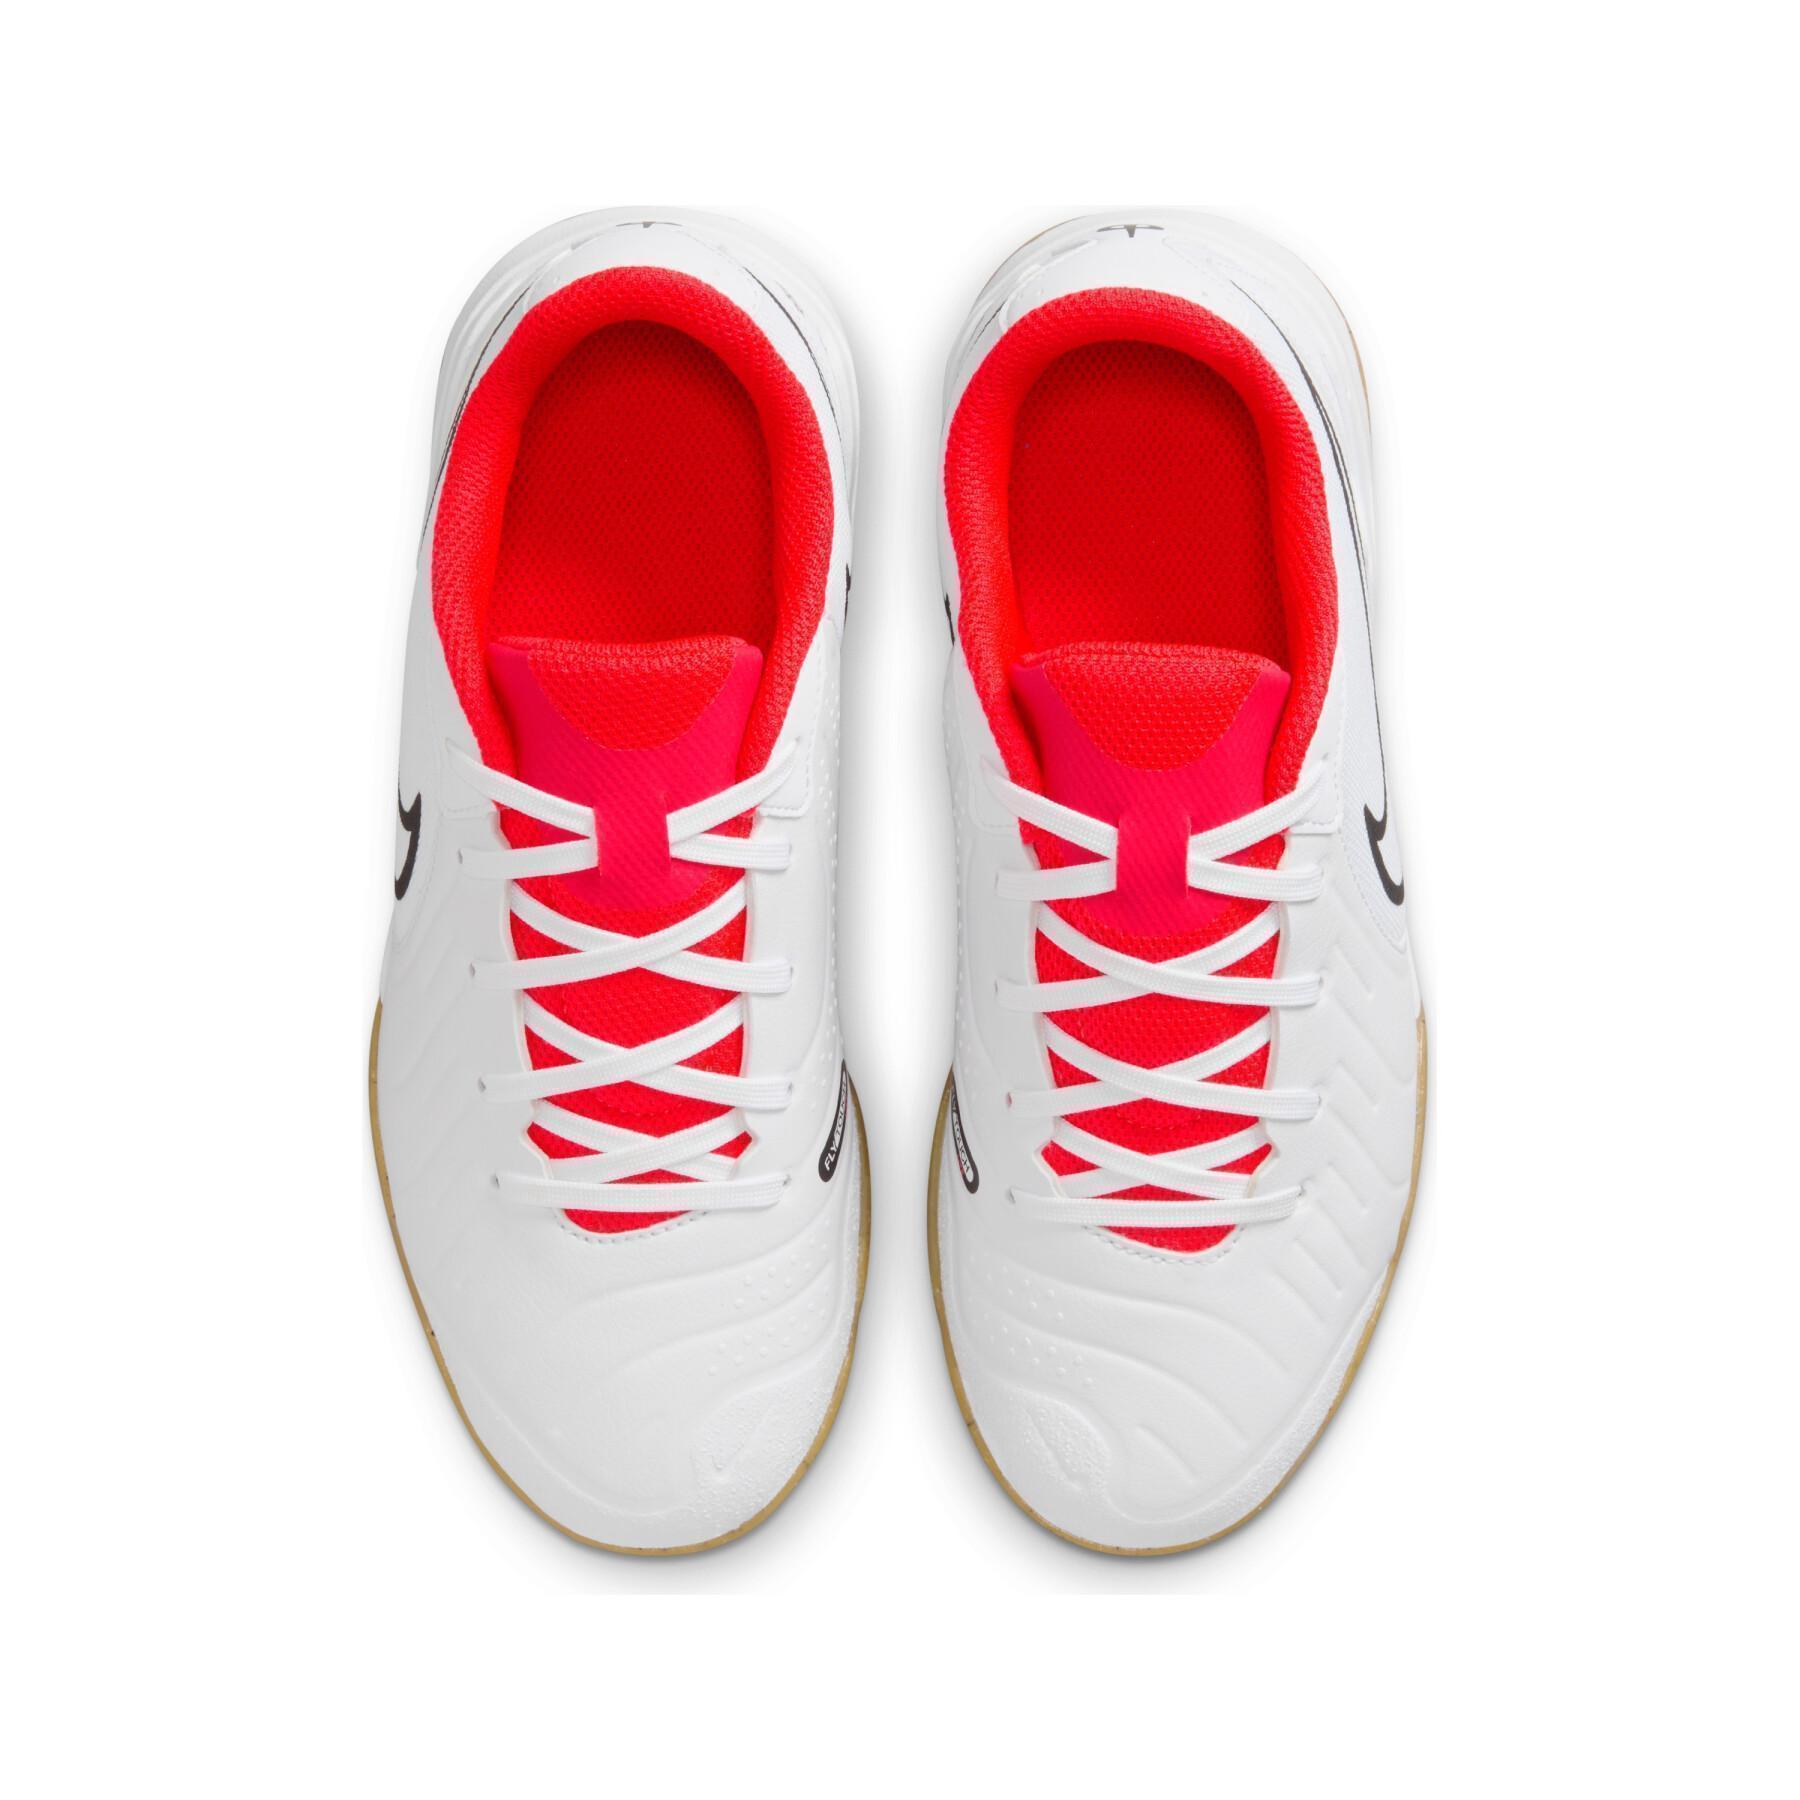 Chaussures de football enfant Nike Tiempo Legend 10 Academy IC